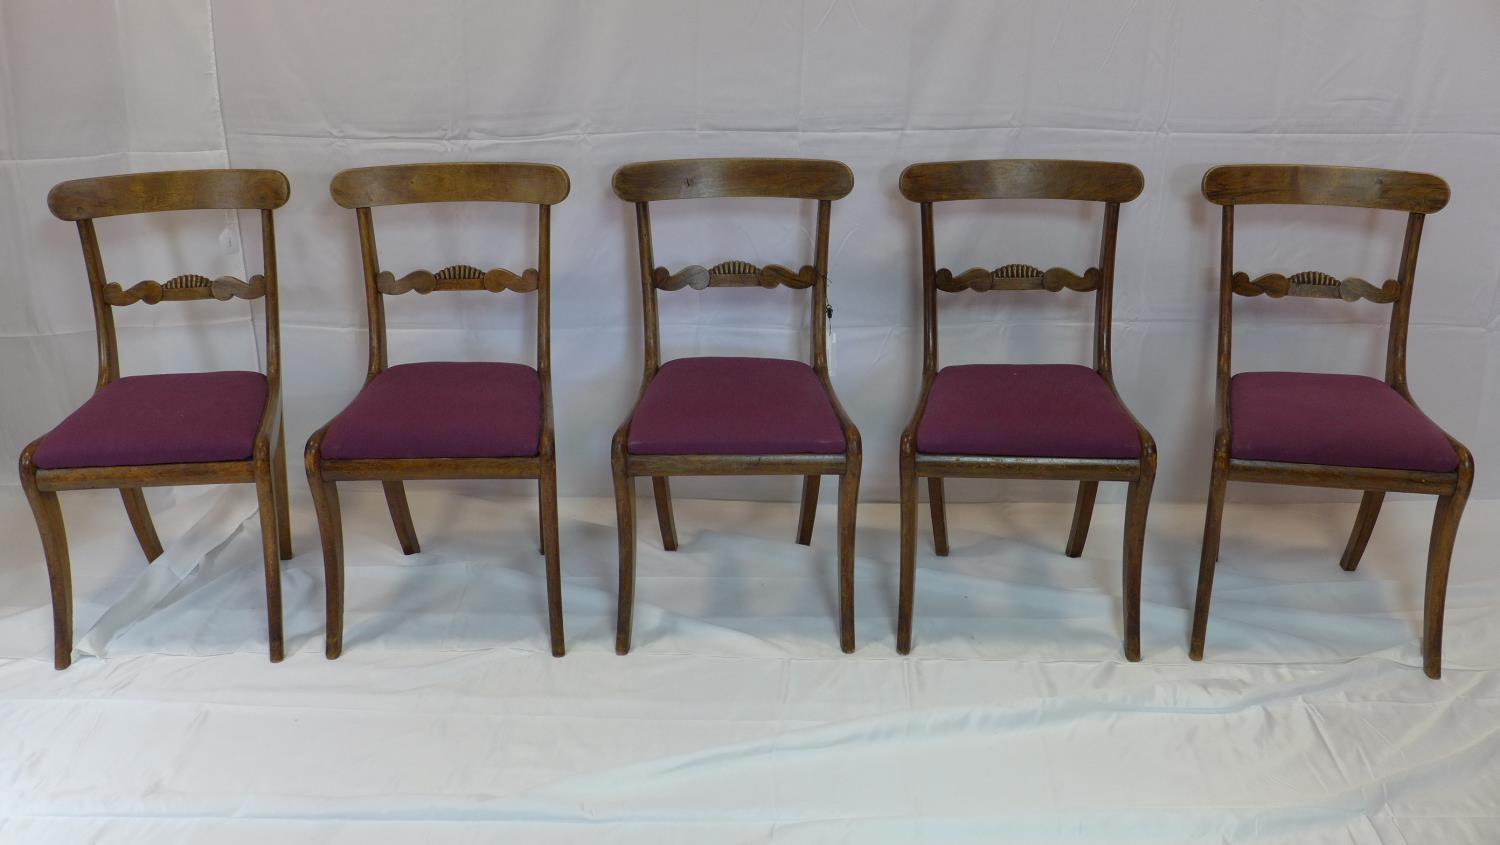 A set of 5 Regency mahogany dining chair